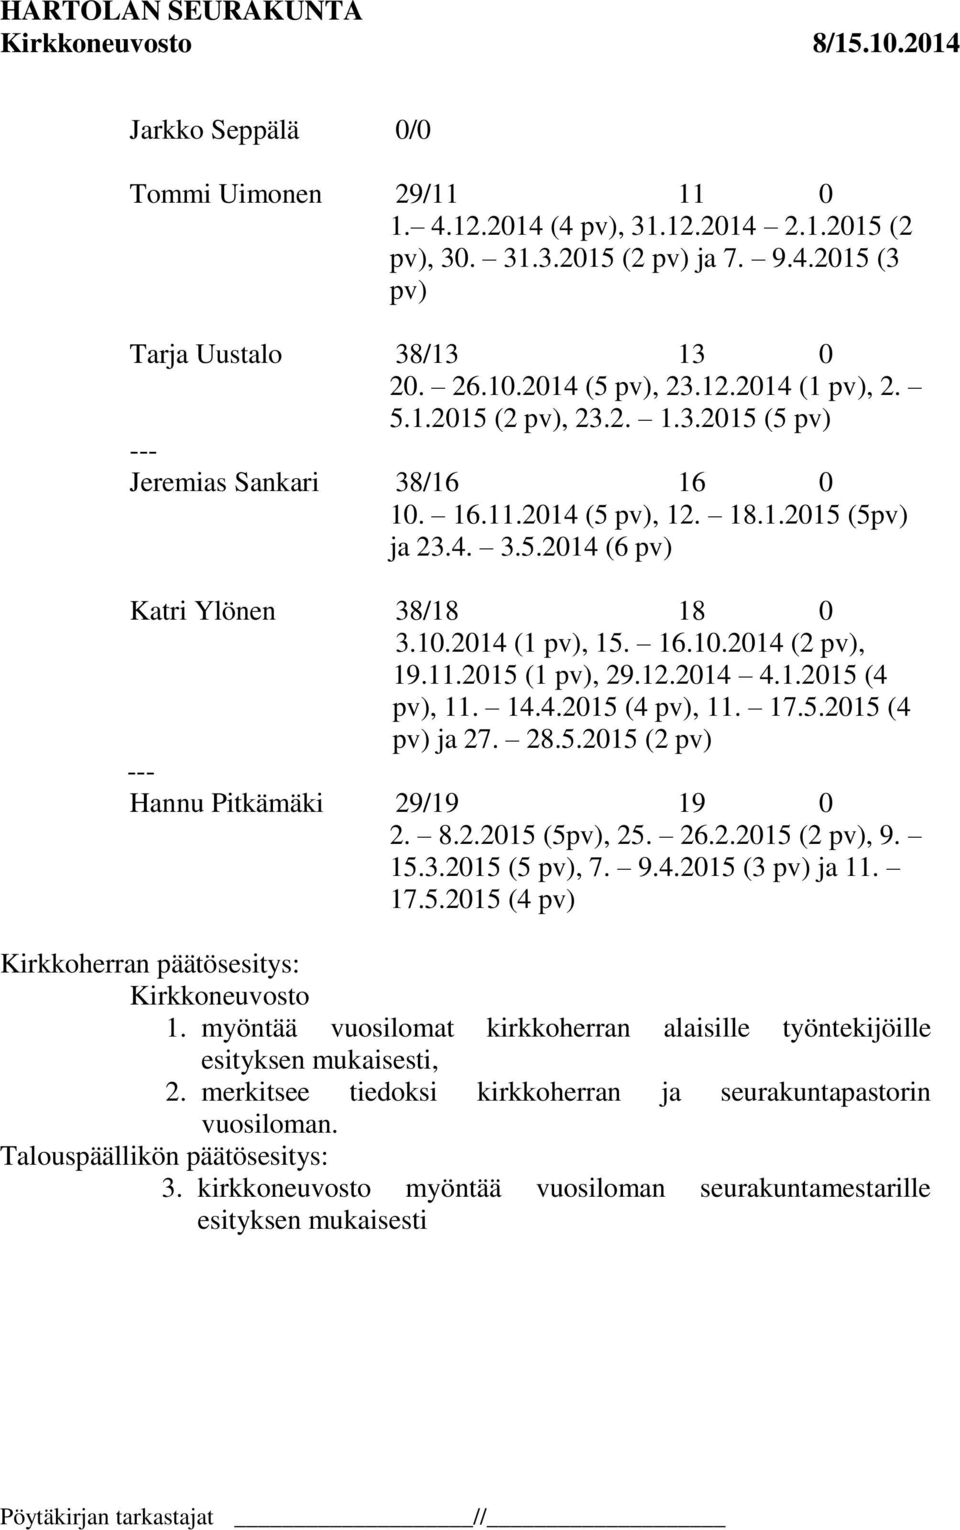 11.2015 (1 pv), 29.12.2014 4.1.2015 (4 pv), 11. 14.4.2015 (4 pv), 11. 17.5.2015 (4 pv) ja 27. 28.5.2015 (2 pv) --- Hannu Pitkämäki 29/19 19 0 2. 8.2.2015 (5pv), 25. 26.2.2015 (2 pv), 9. 15.3.